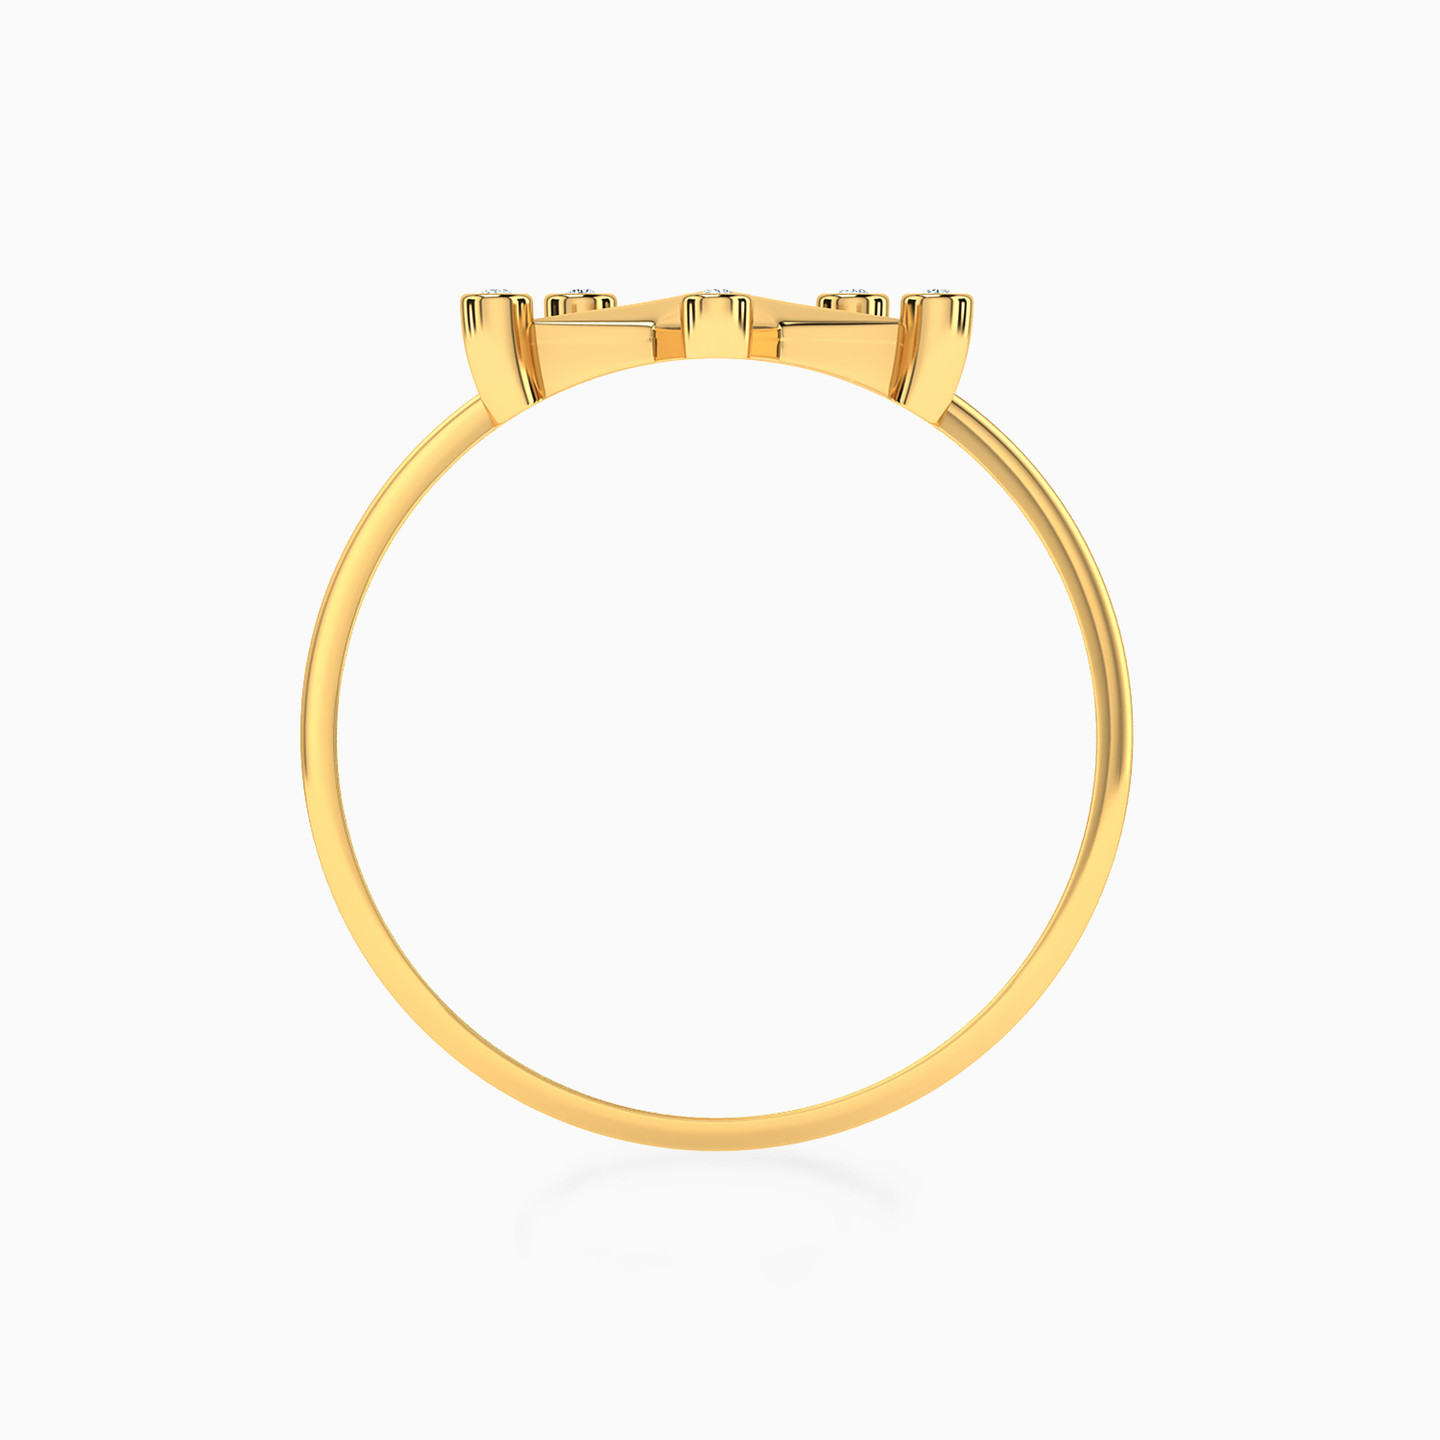 18K Gold Diamond Statement Ring - 3